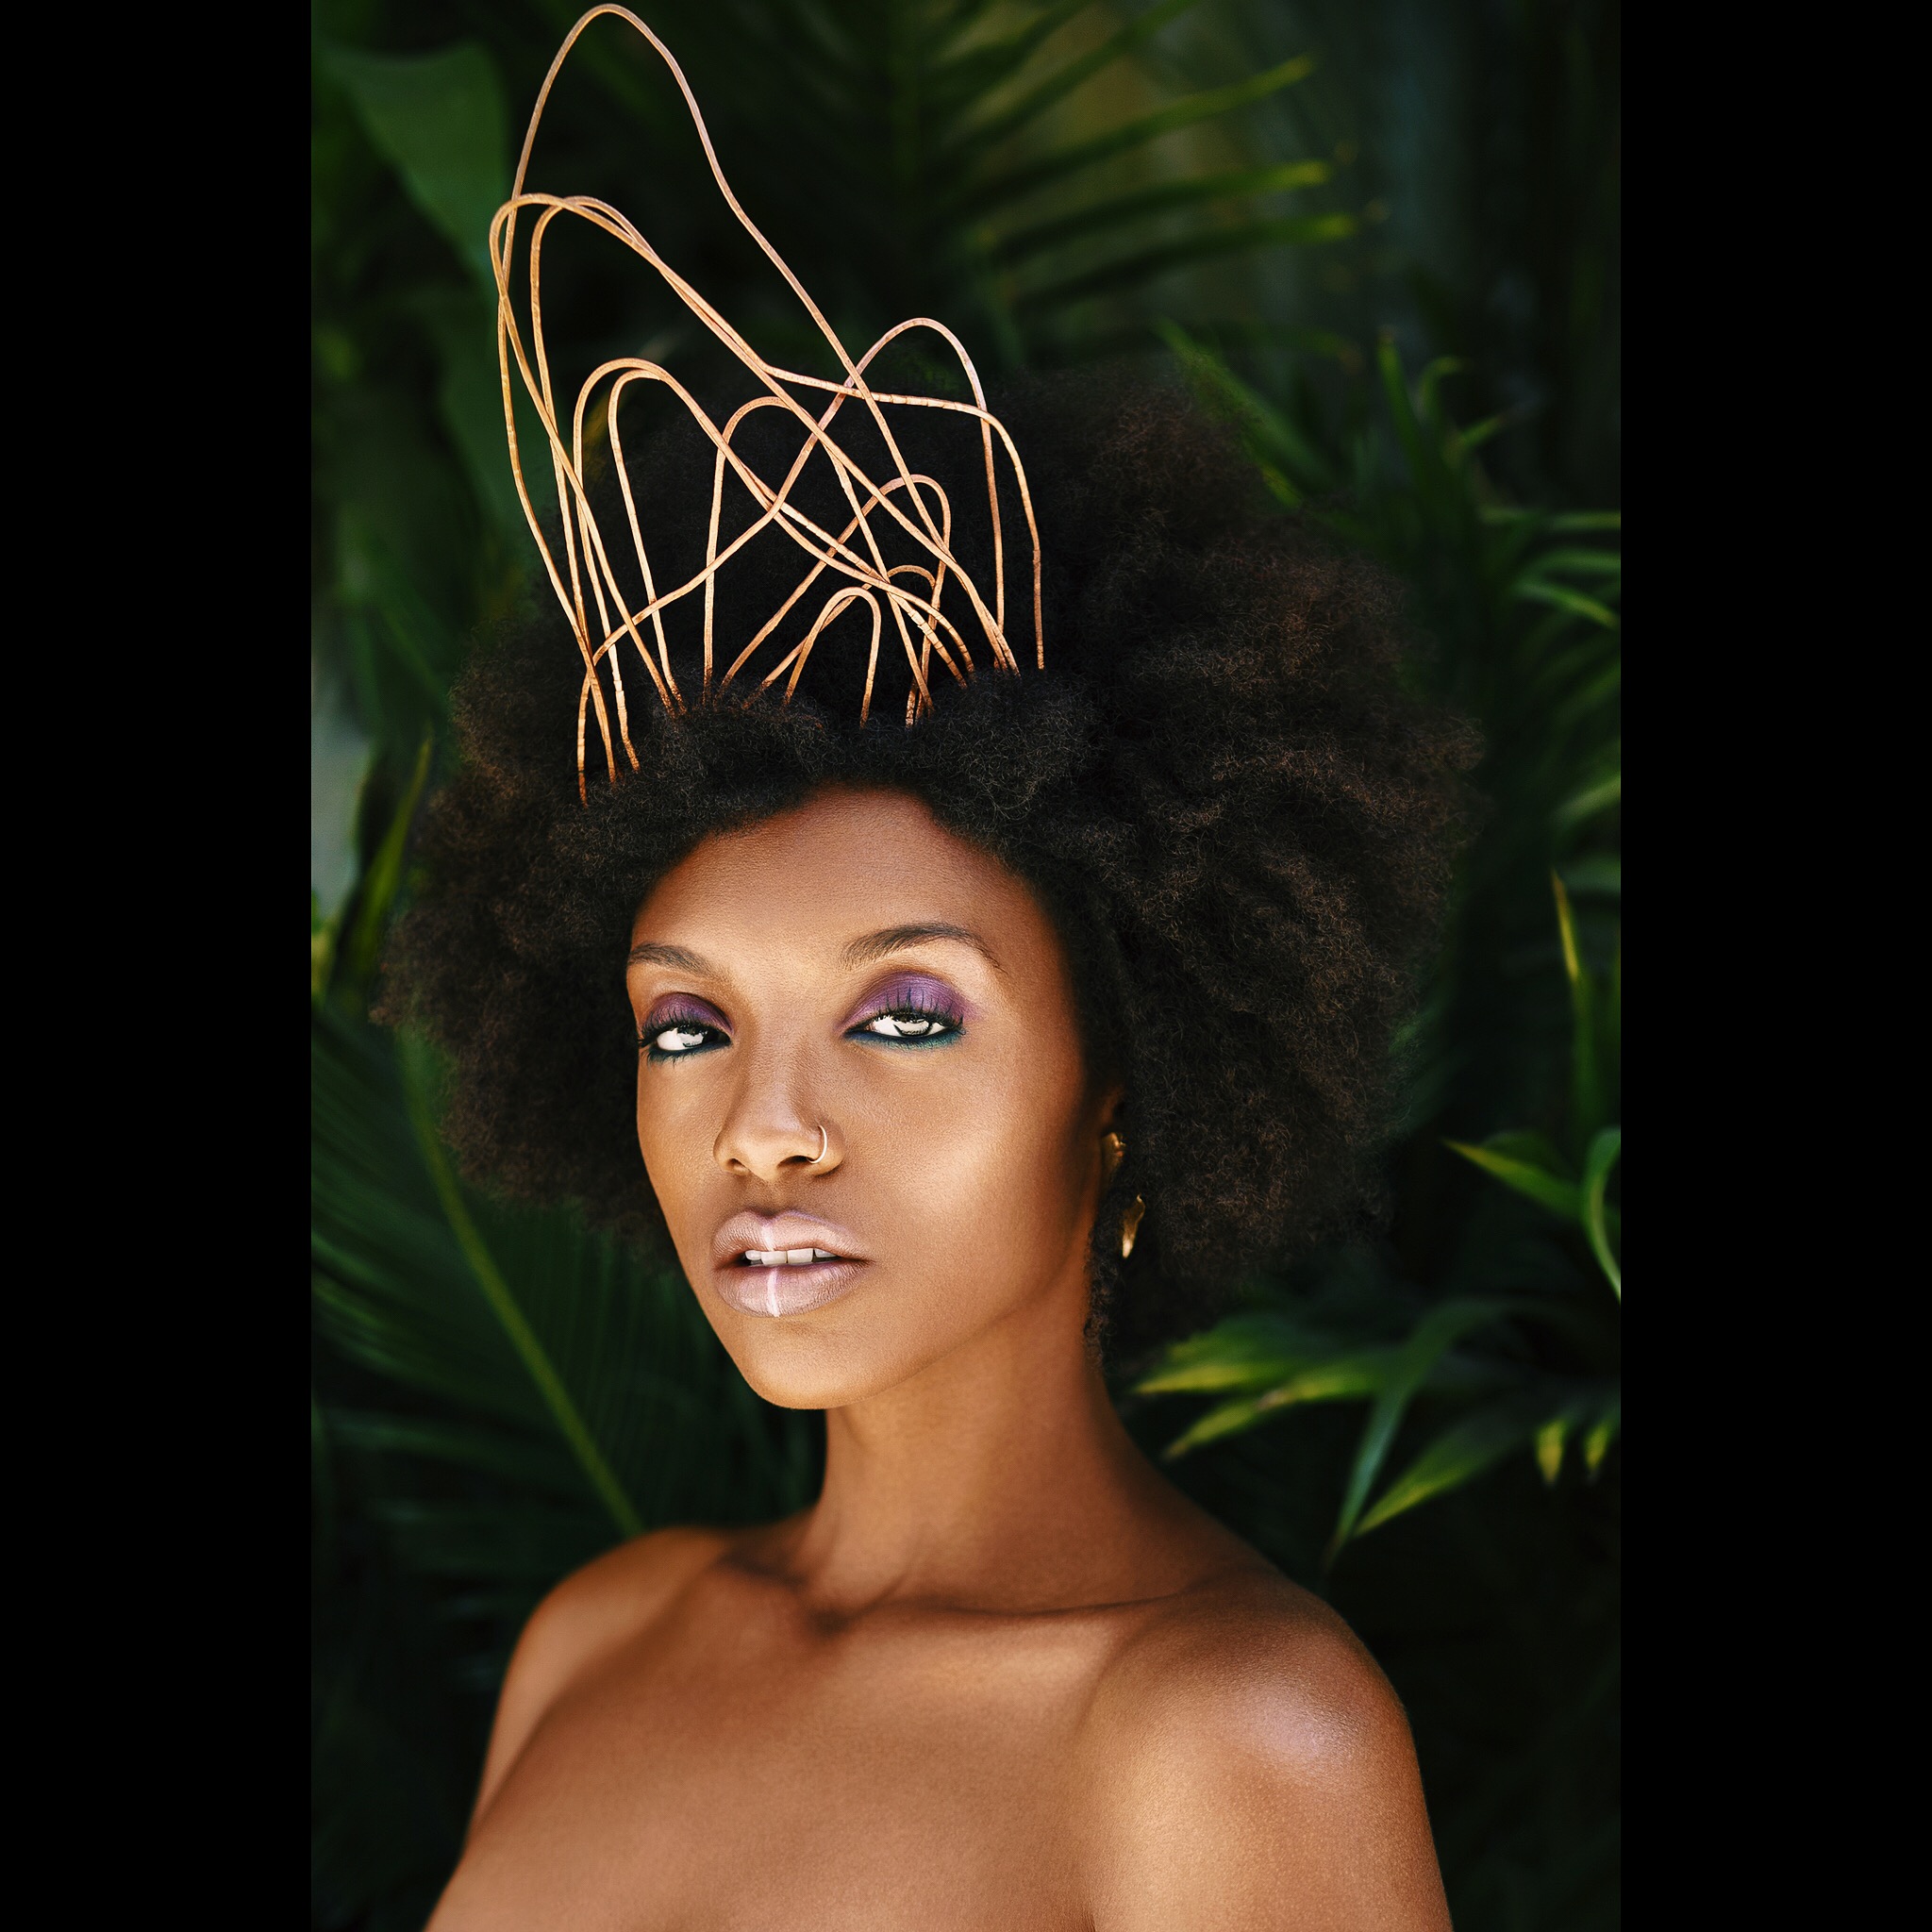 Melanesia, The Makeup Artist